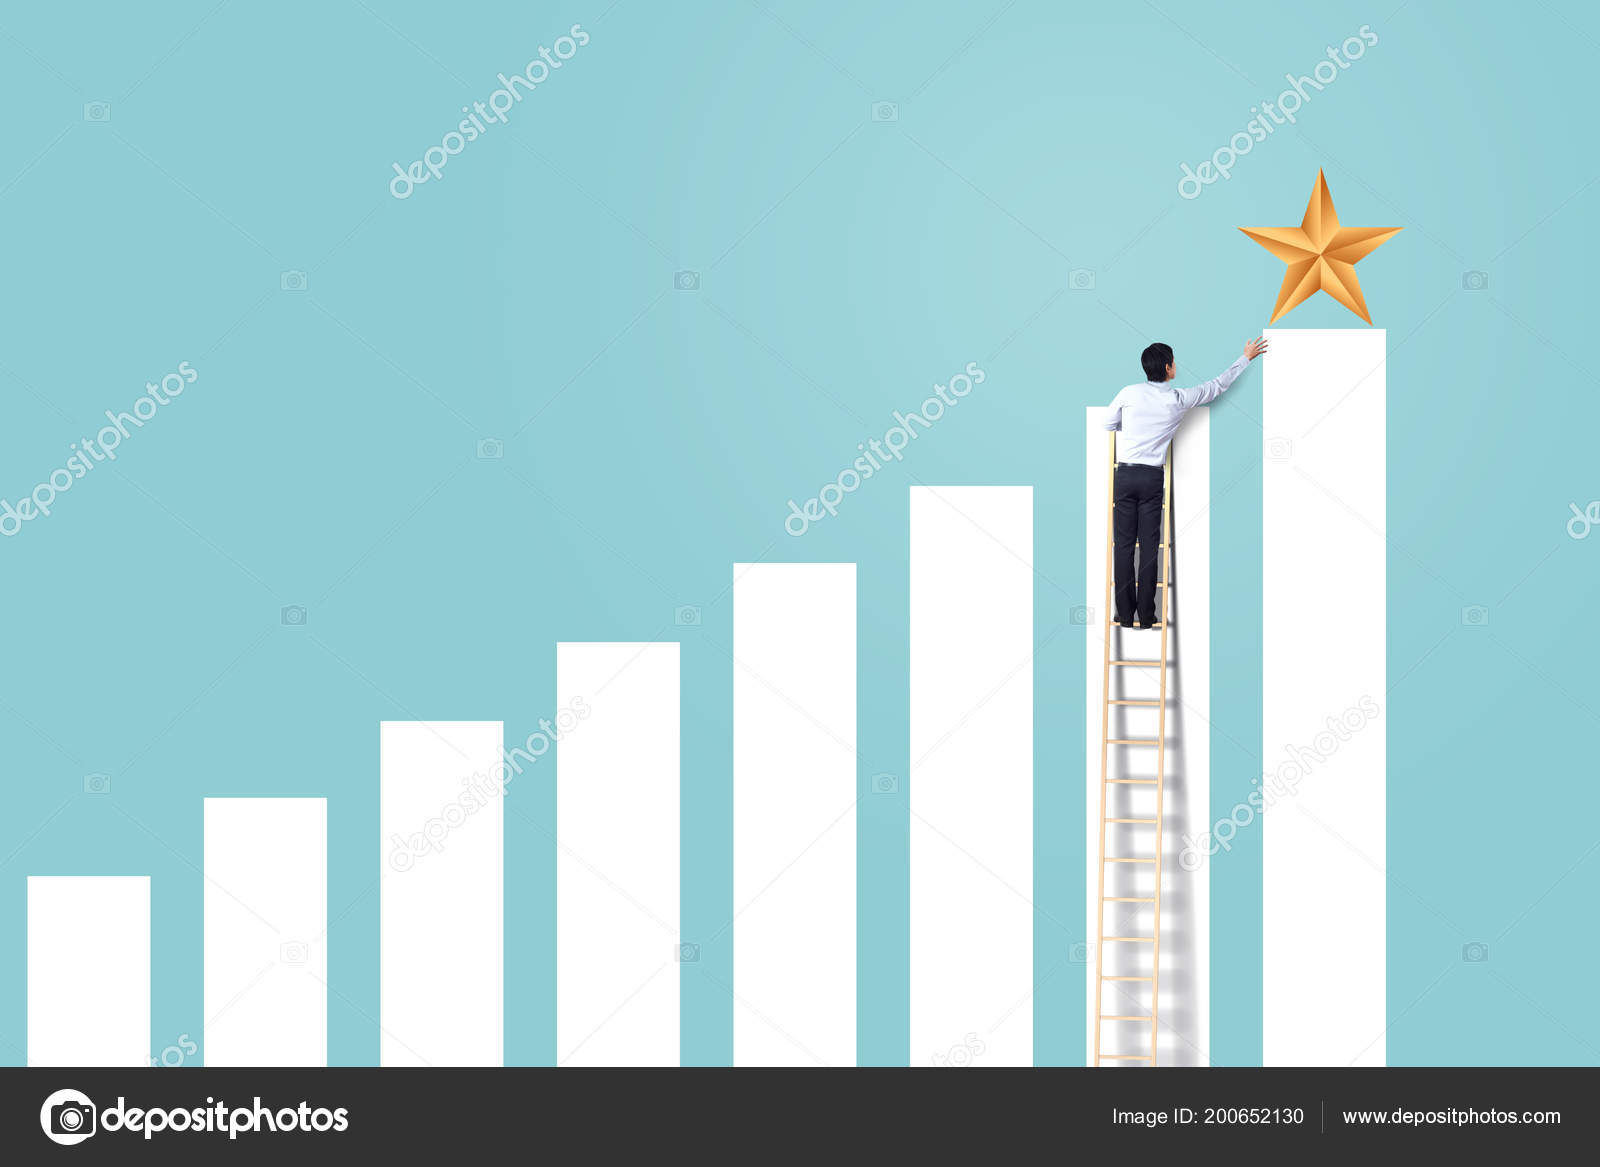 depositphotos_200652130-stock-photo-businessman-climb-rising-graph-ladder.jpg